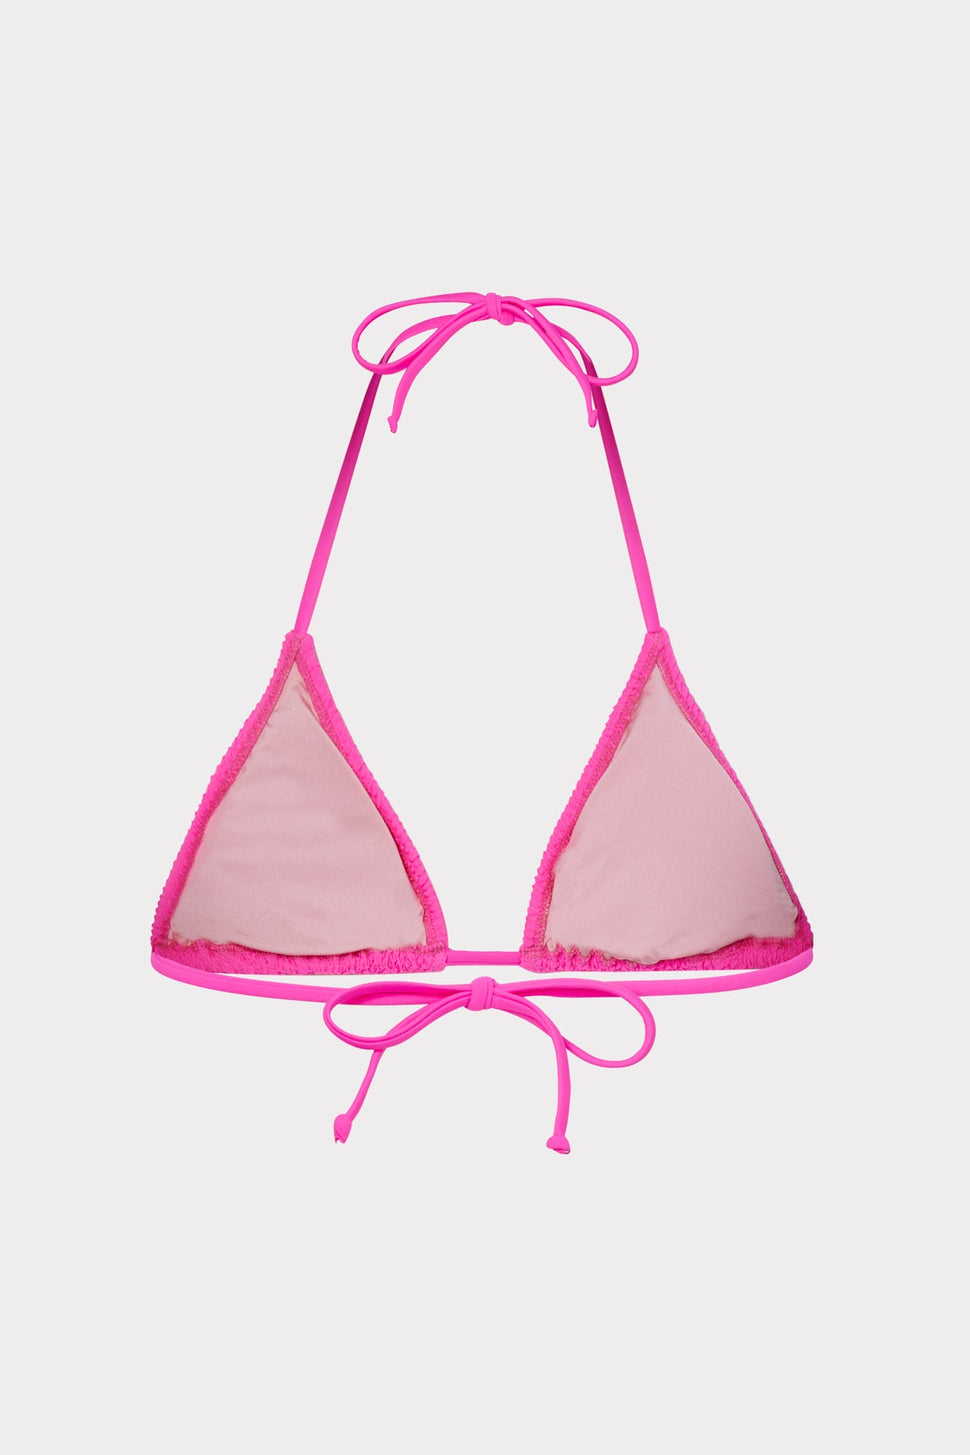 Doll Swimwear Neon Pink Triangle Top - M